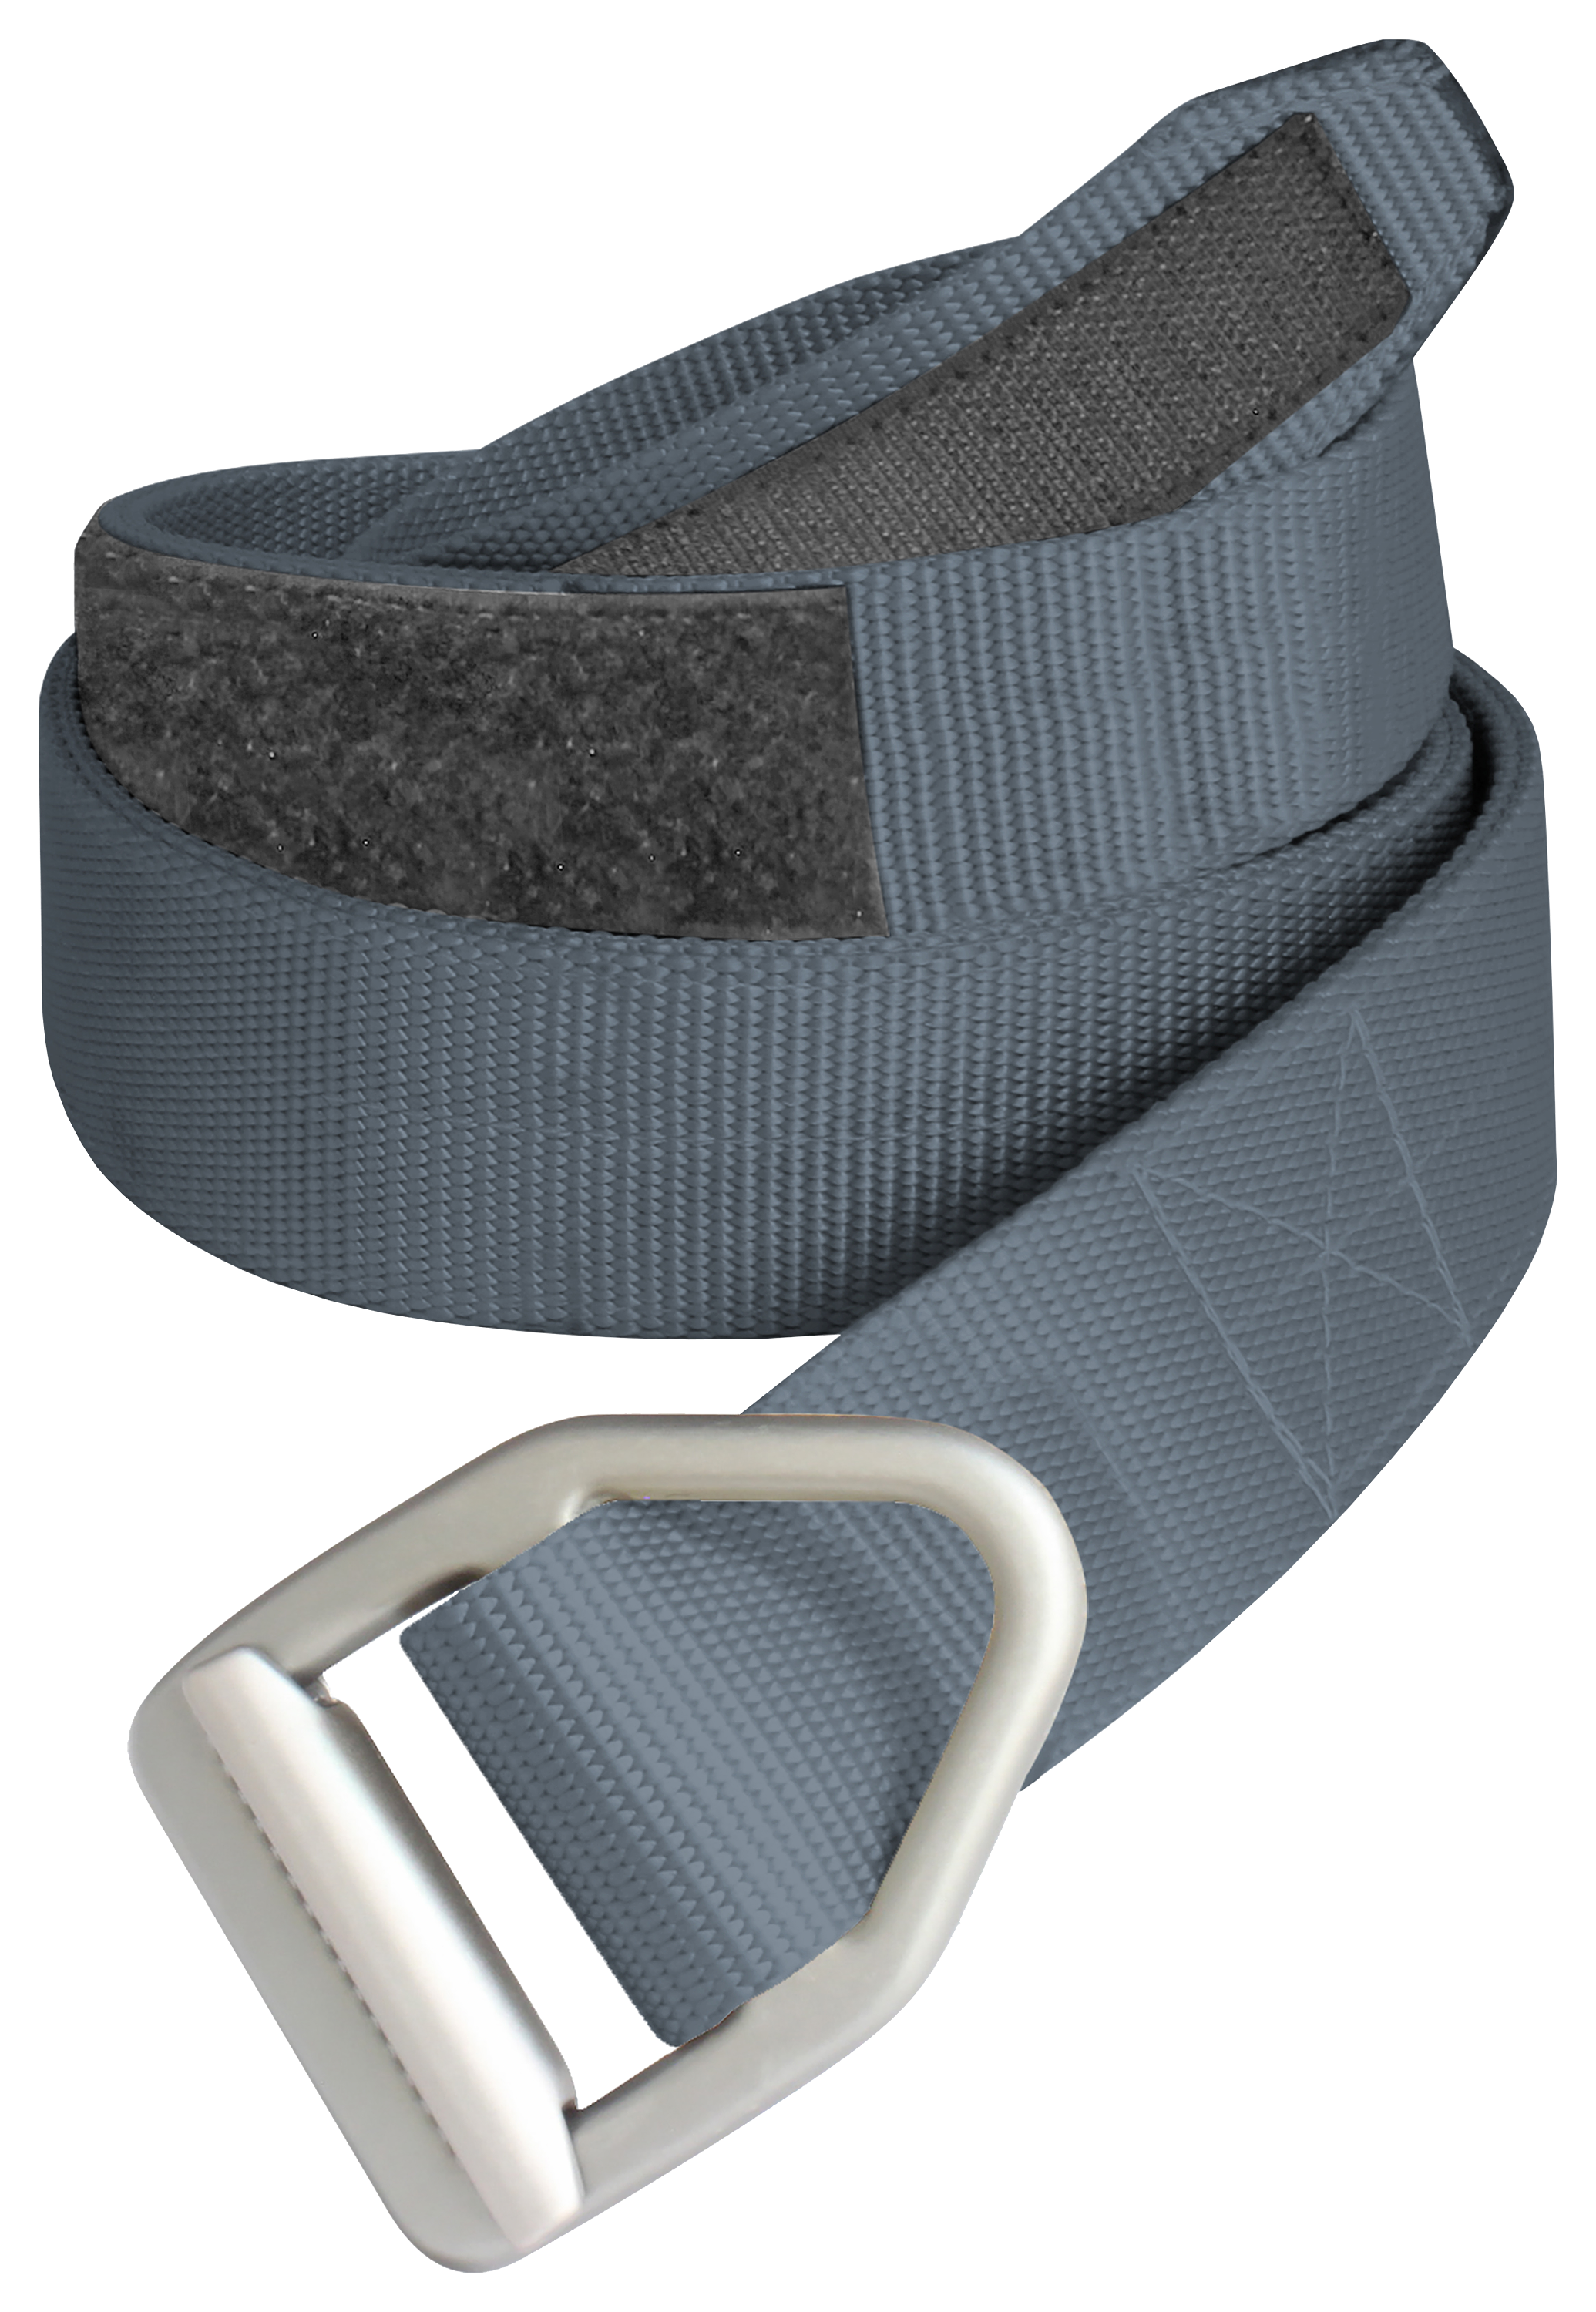 Bison Designs Last Chance Heavy-Duty Belt for Men - Graphite - XL